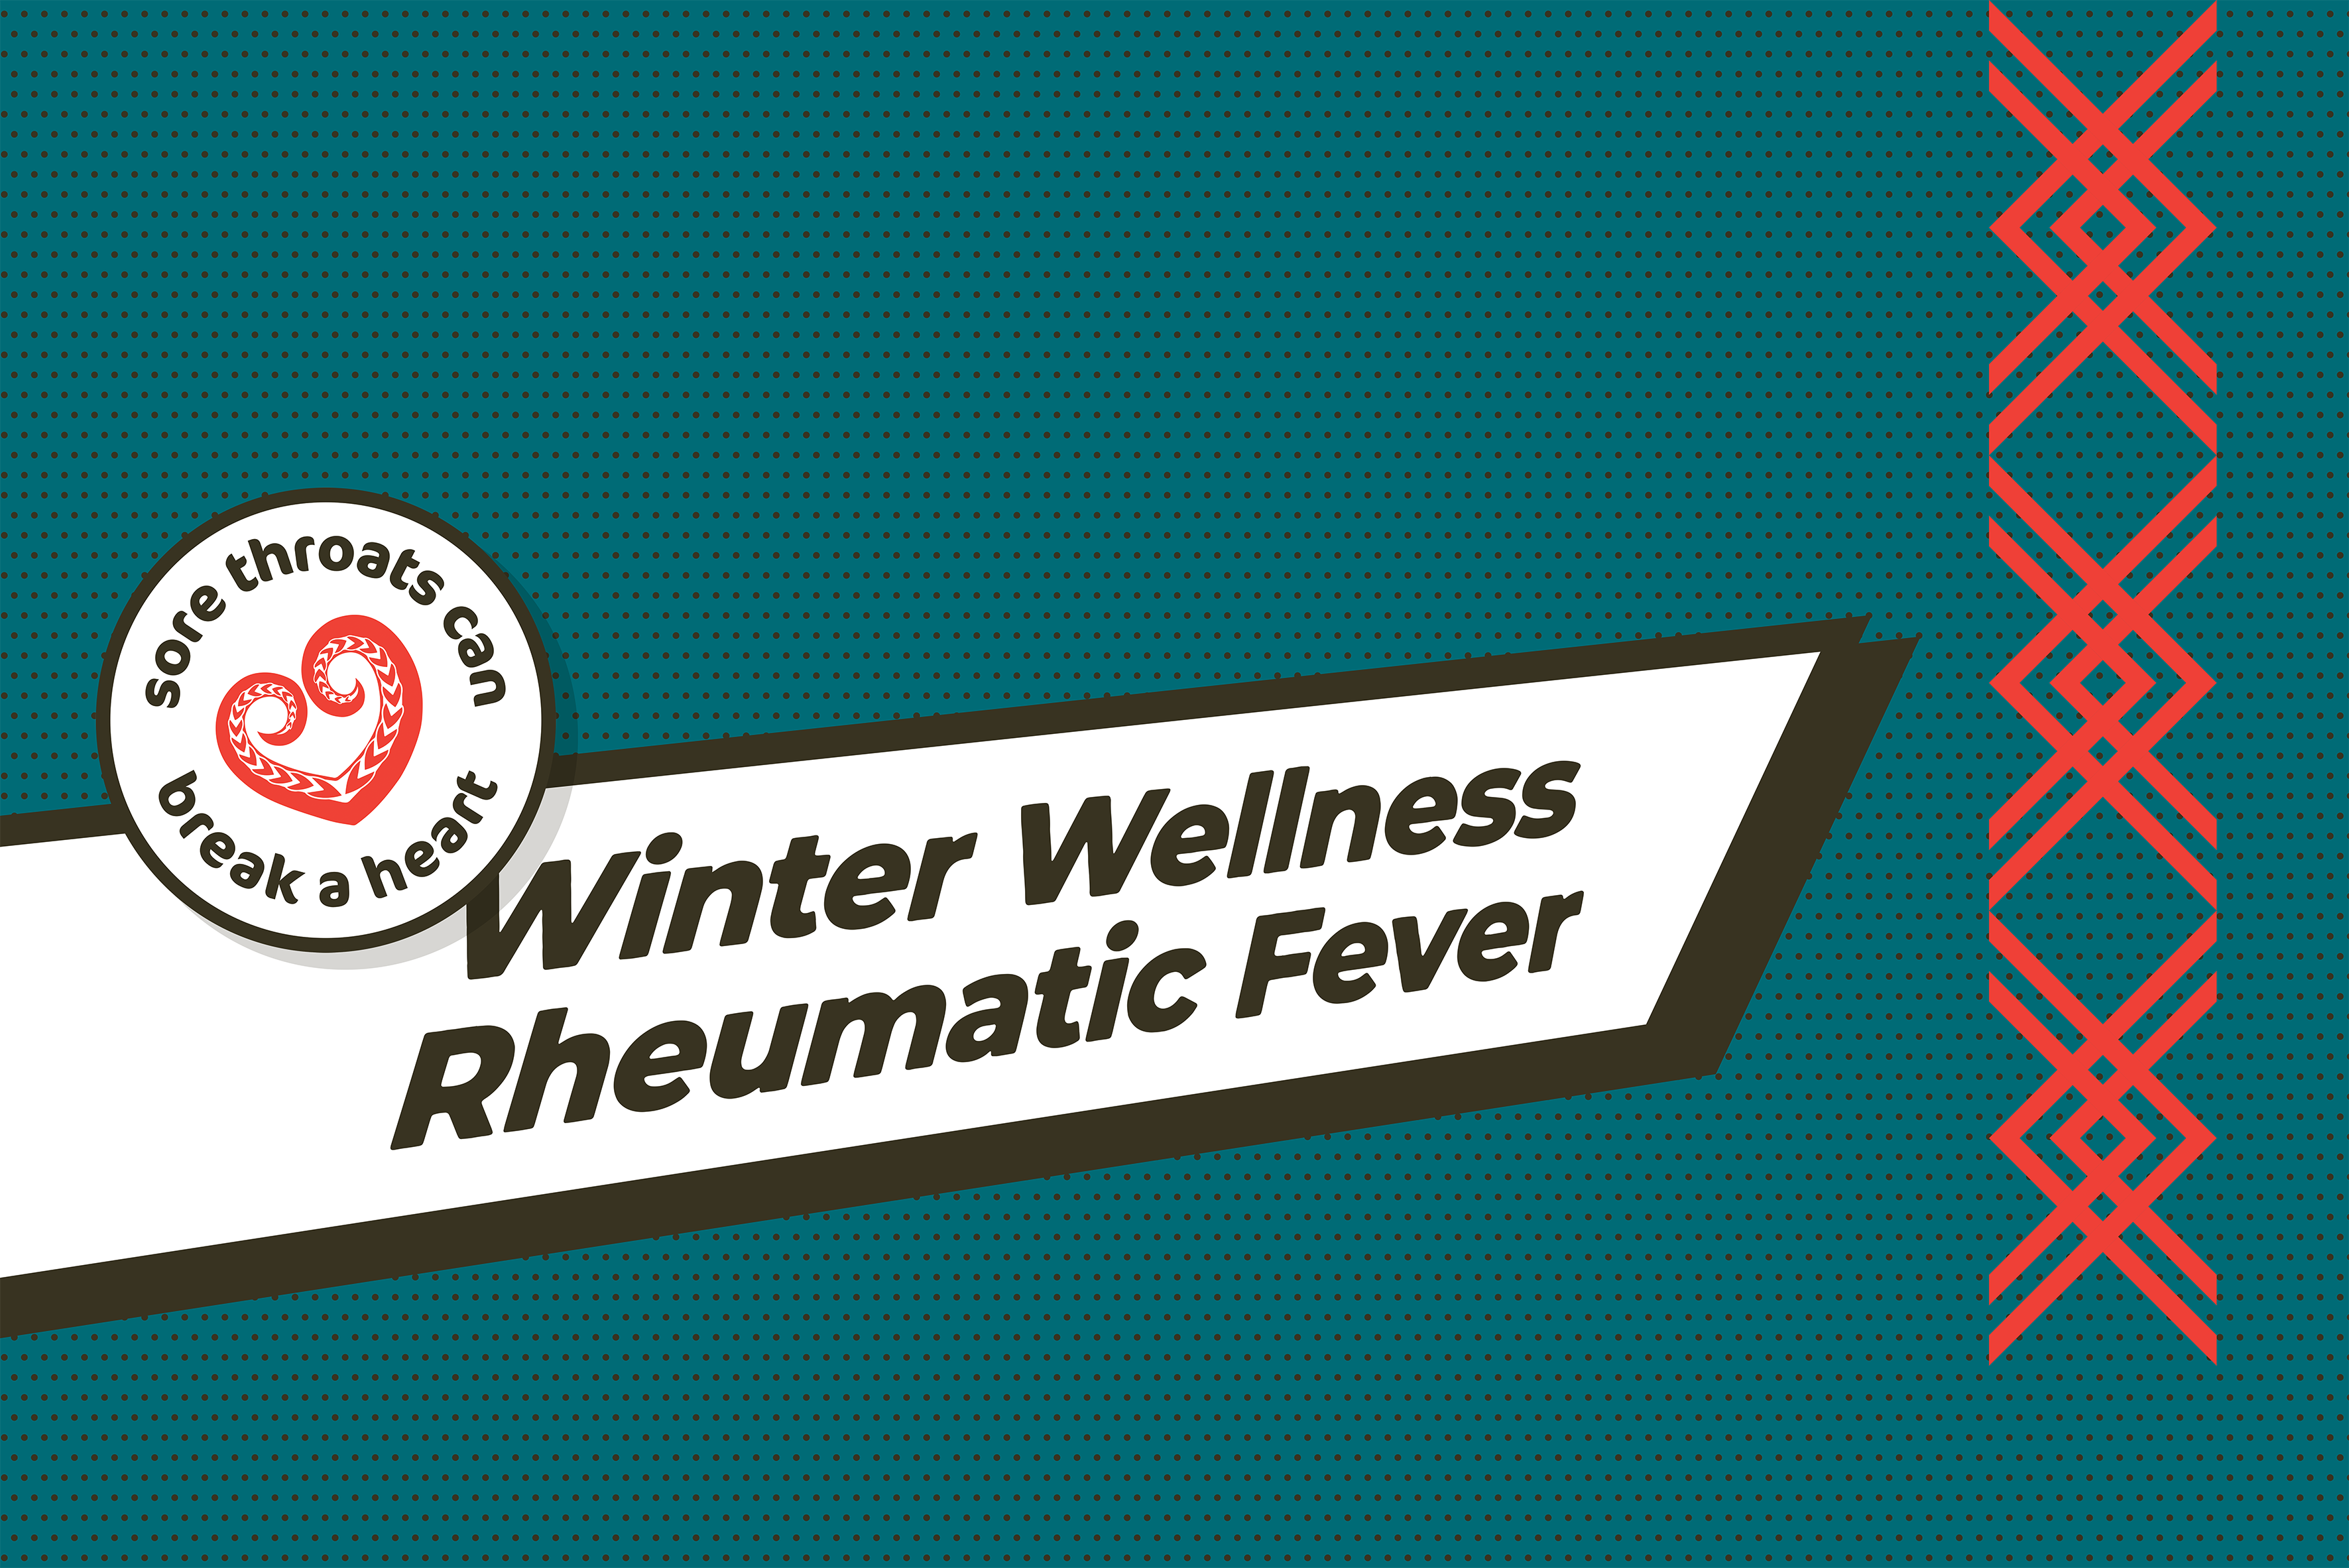 Rheumatic fever resource banner